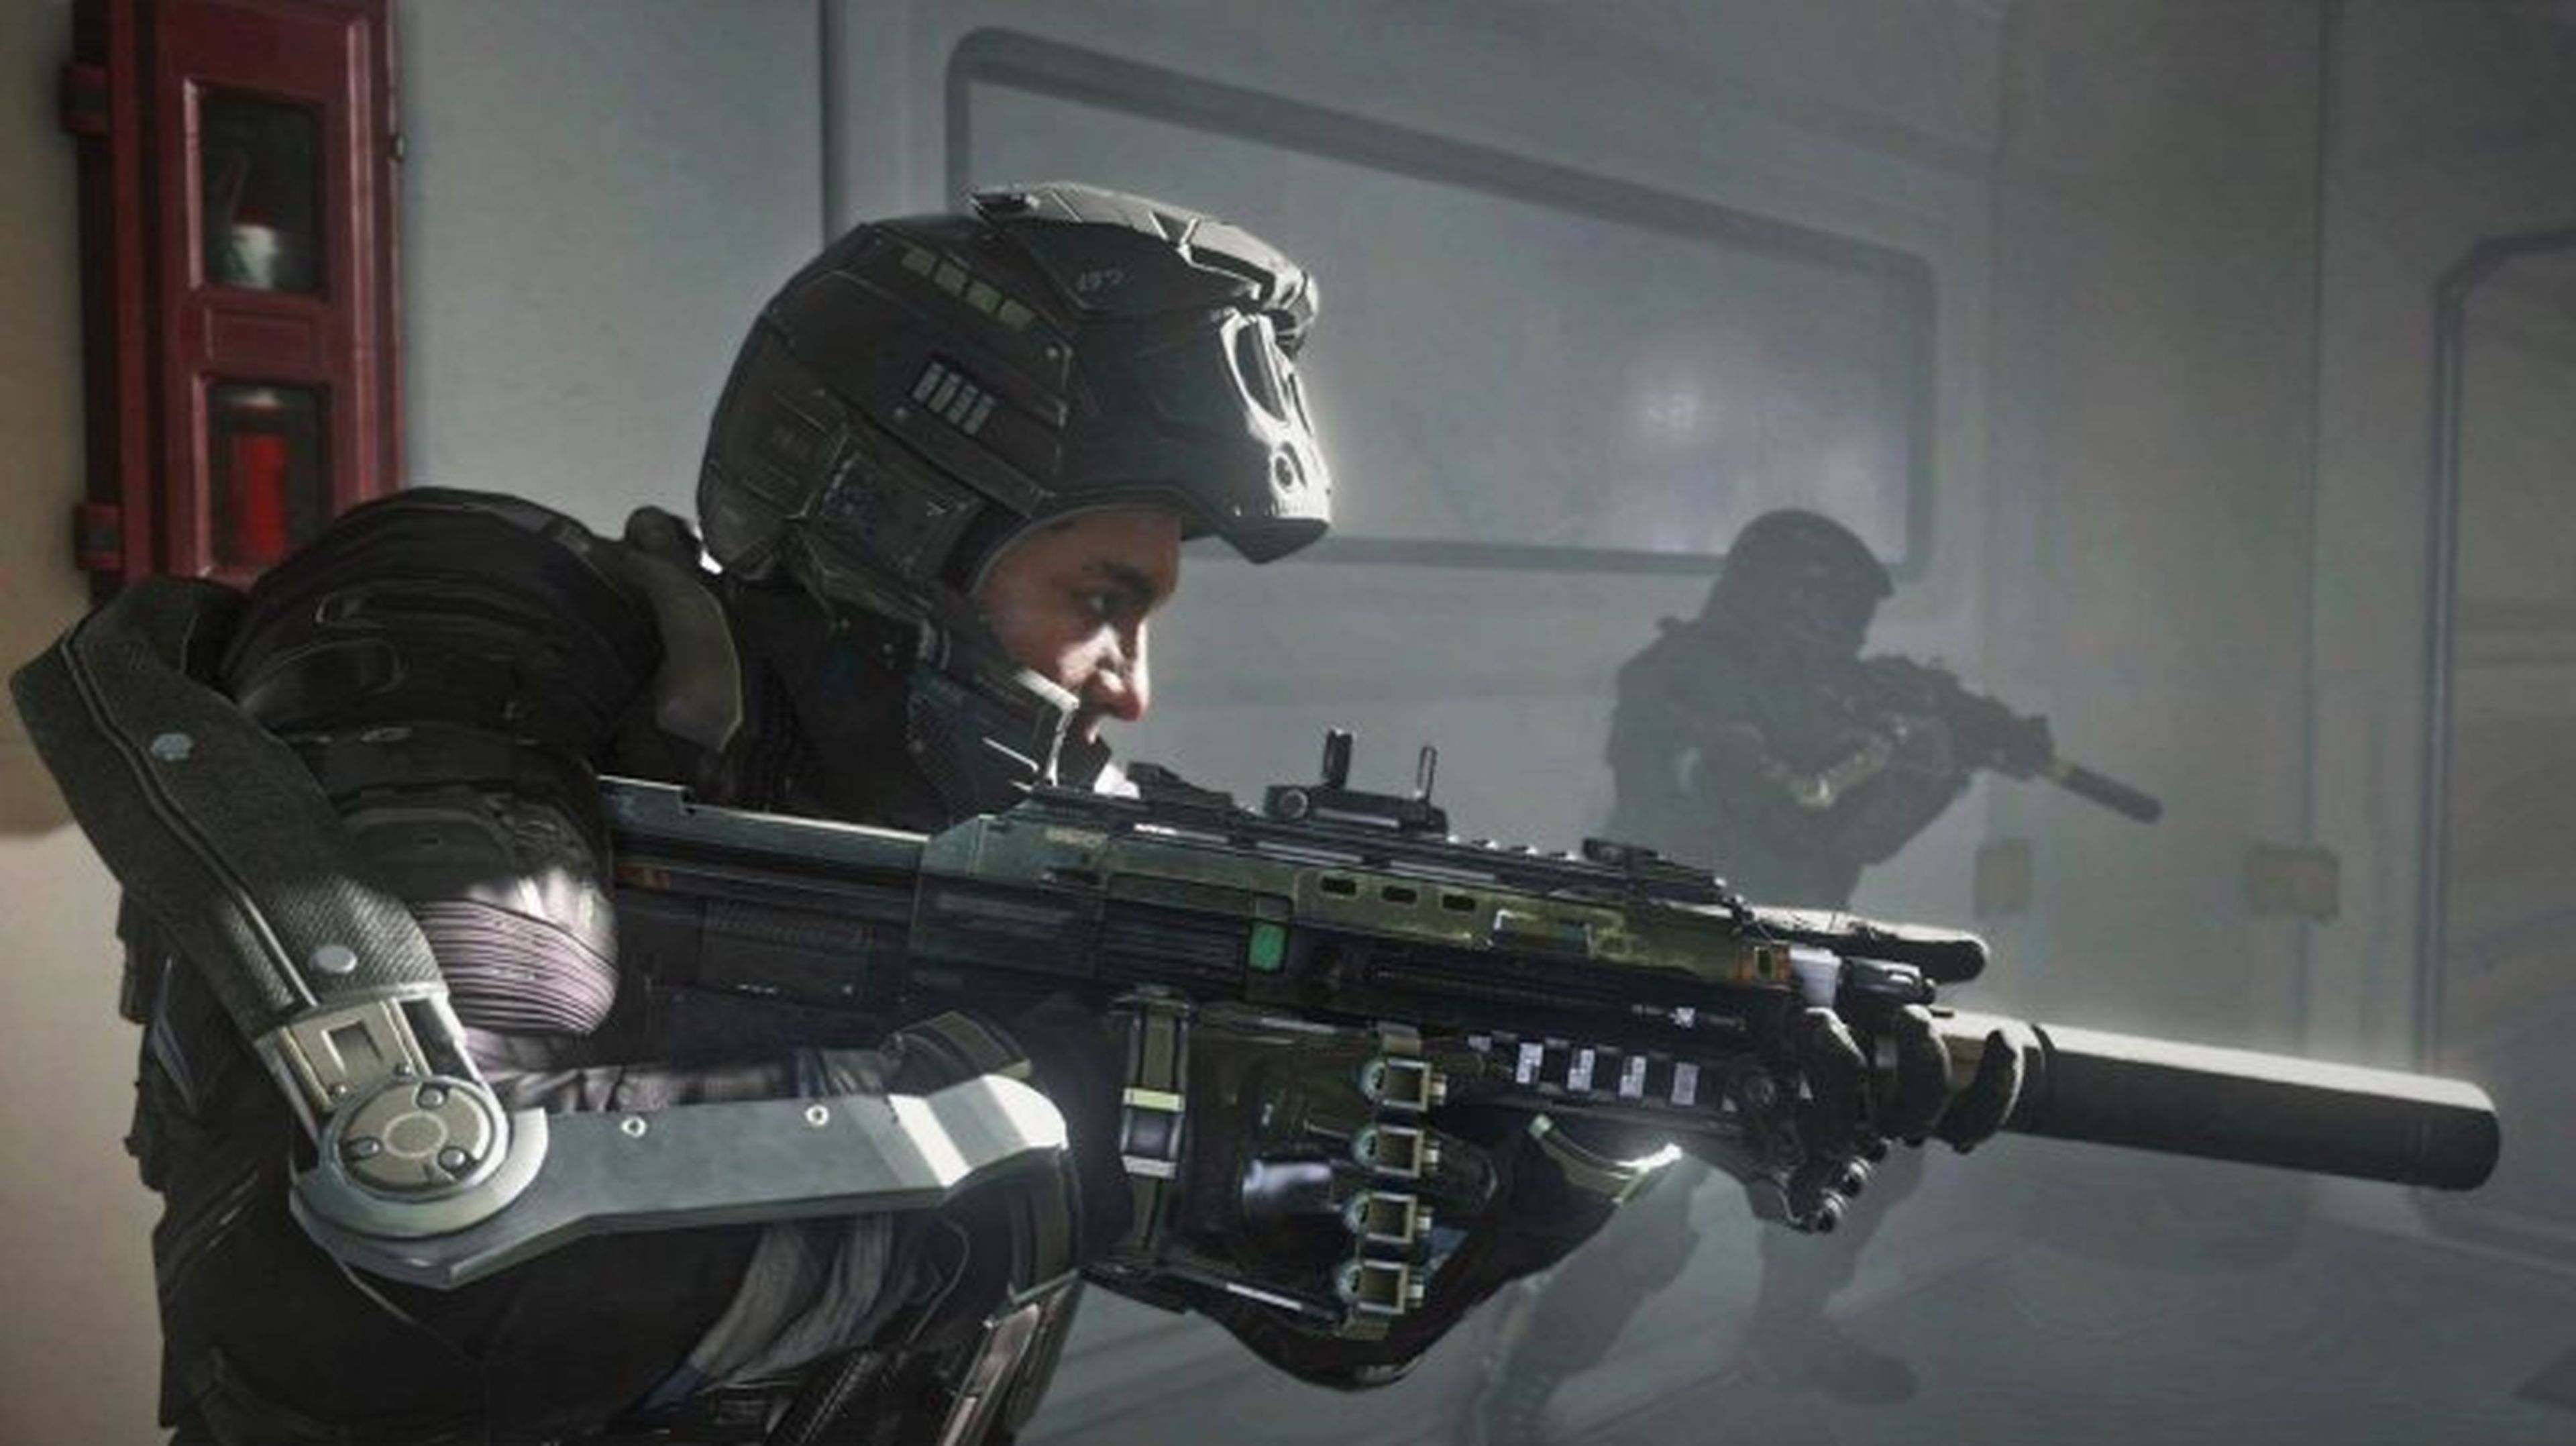 Sledgehammer habla sobre Call of Duty Advanced Warfare